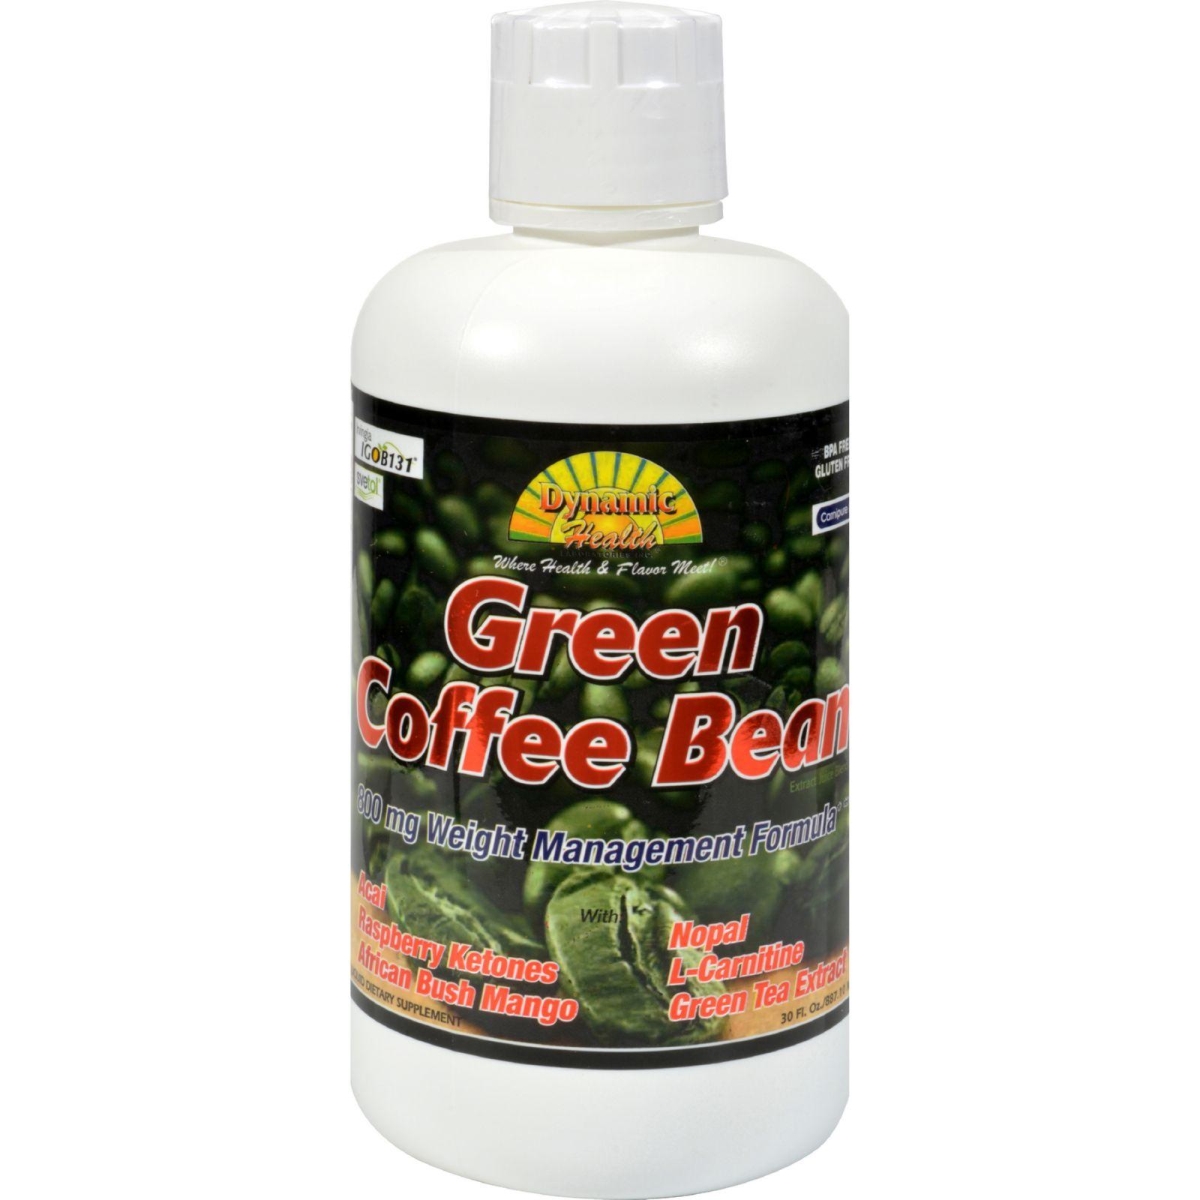 Dynamic Health Hg1196377 30 Fl Oz Green Coffee Bean Extract Juice Blend, 800 Mg